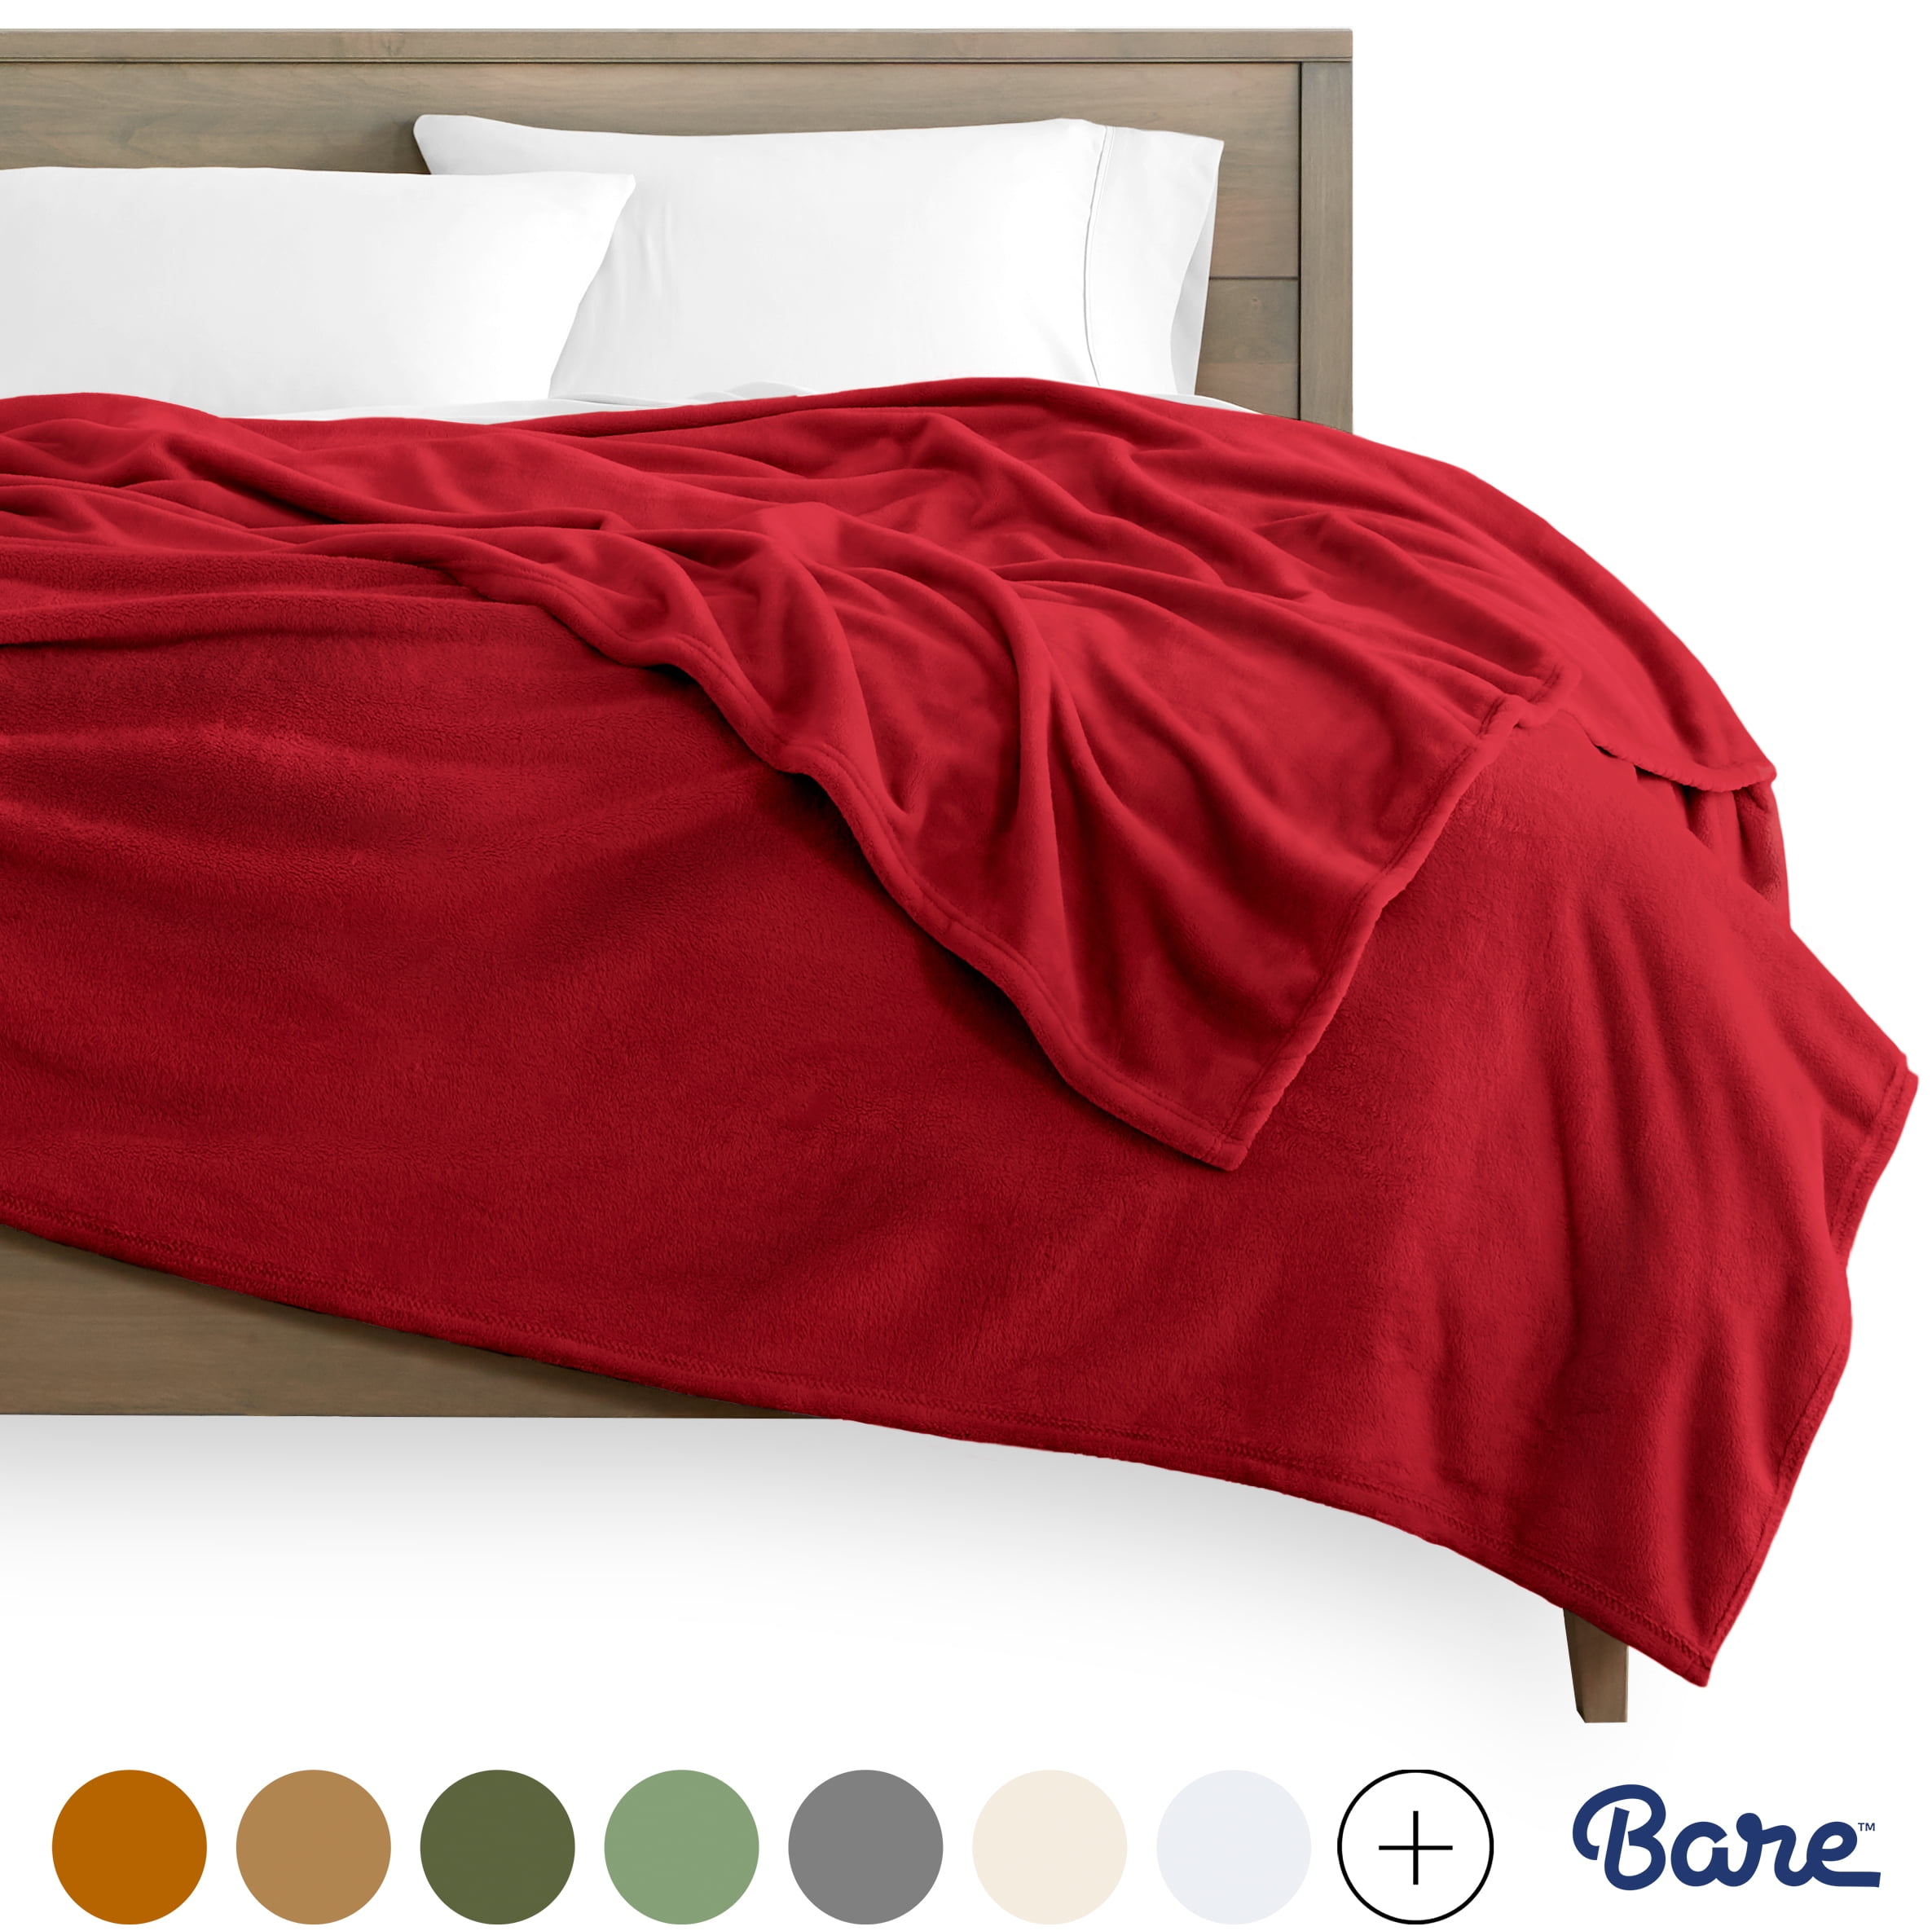 Sea inhabitants Ultra Soft Micro Fleece Blanket Throw Blanket Warm Comfortable Fuzzy All Season Bed Soft Dorm 80x60